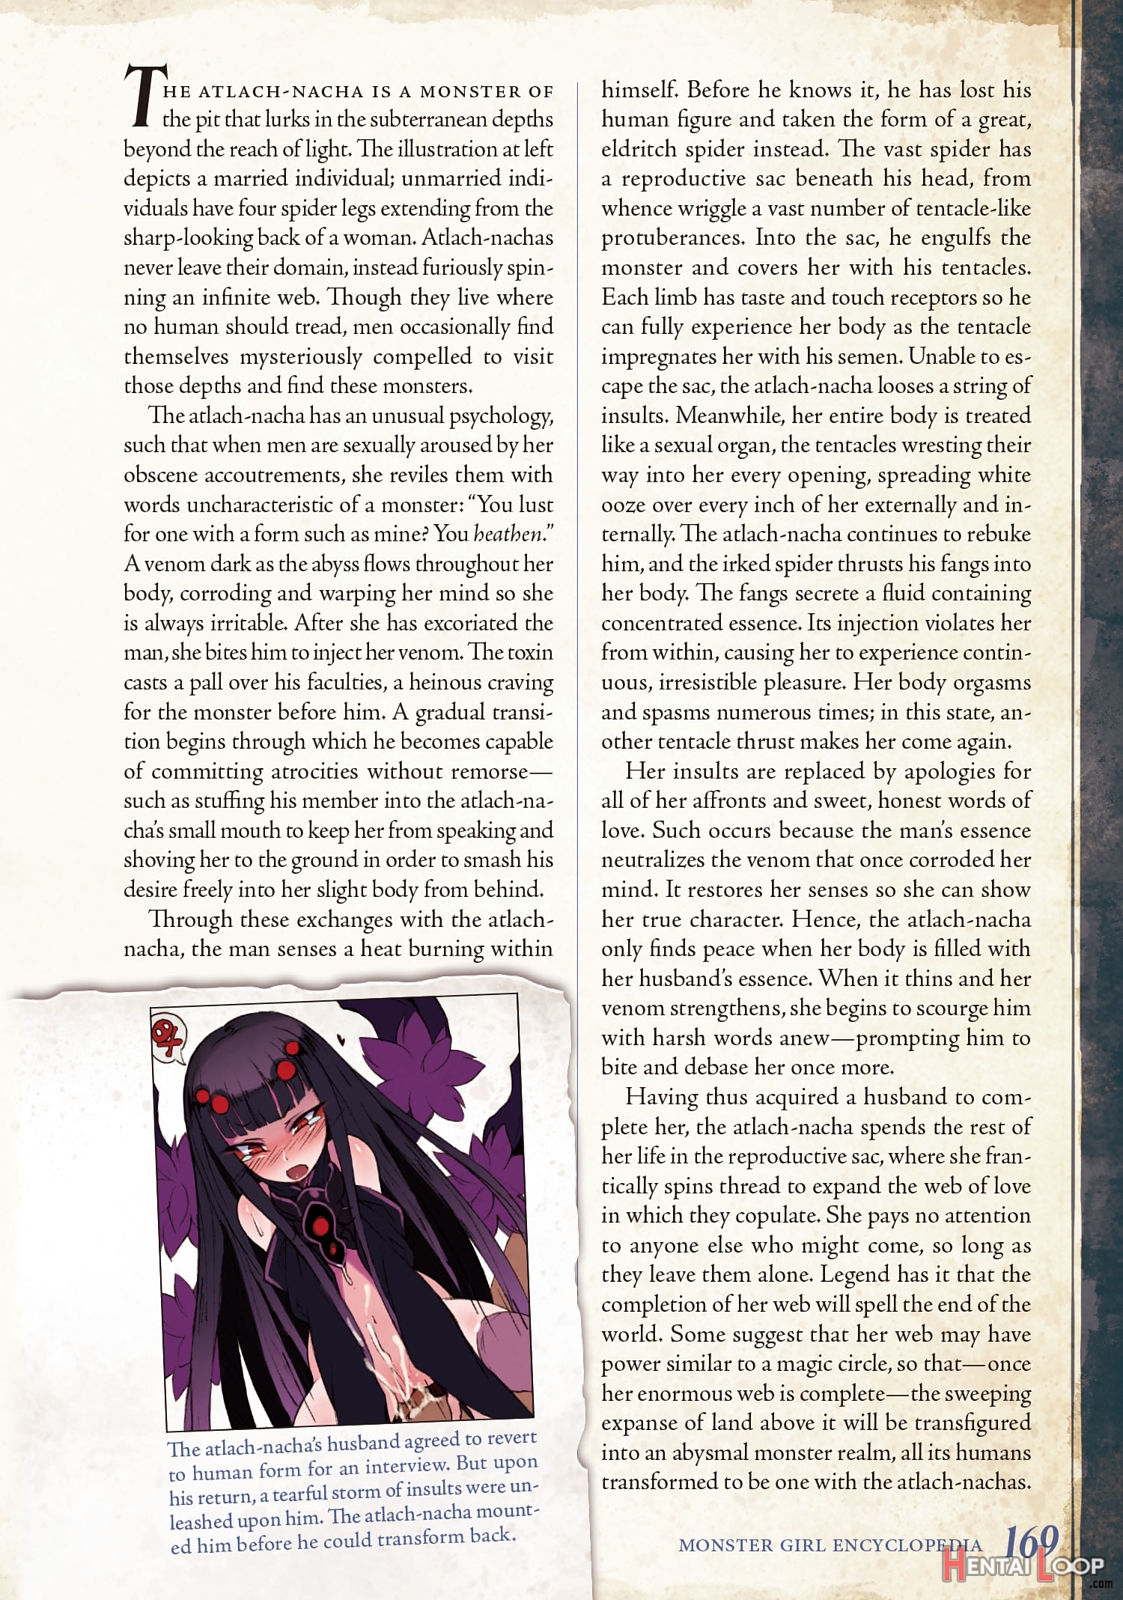 Monster Girl Encyclopedia Vol. 2 page 170